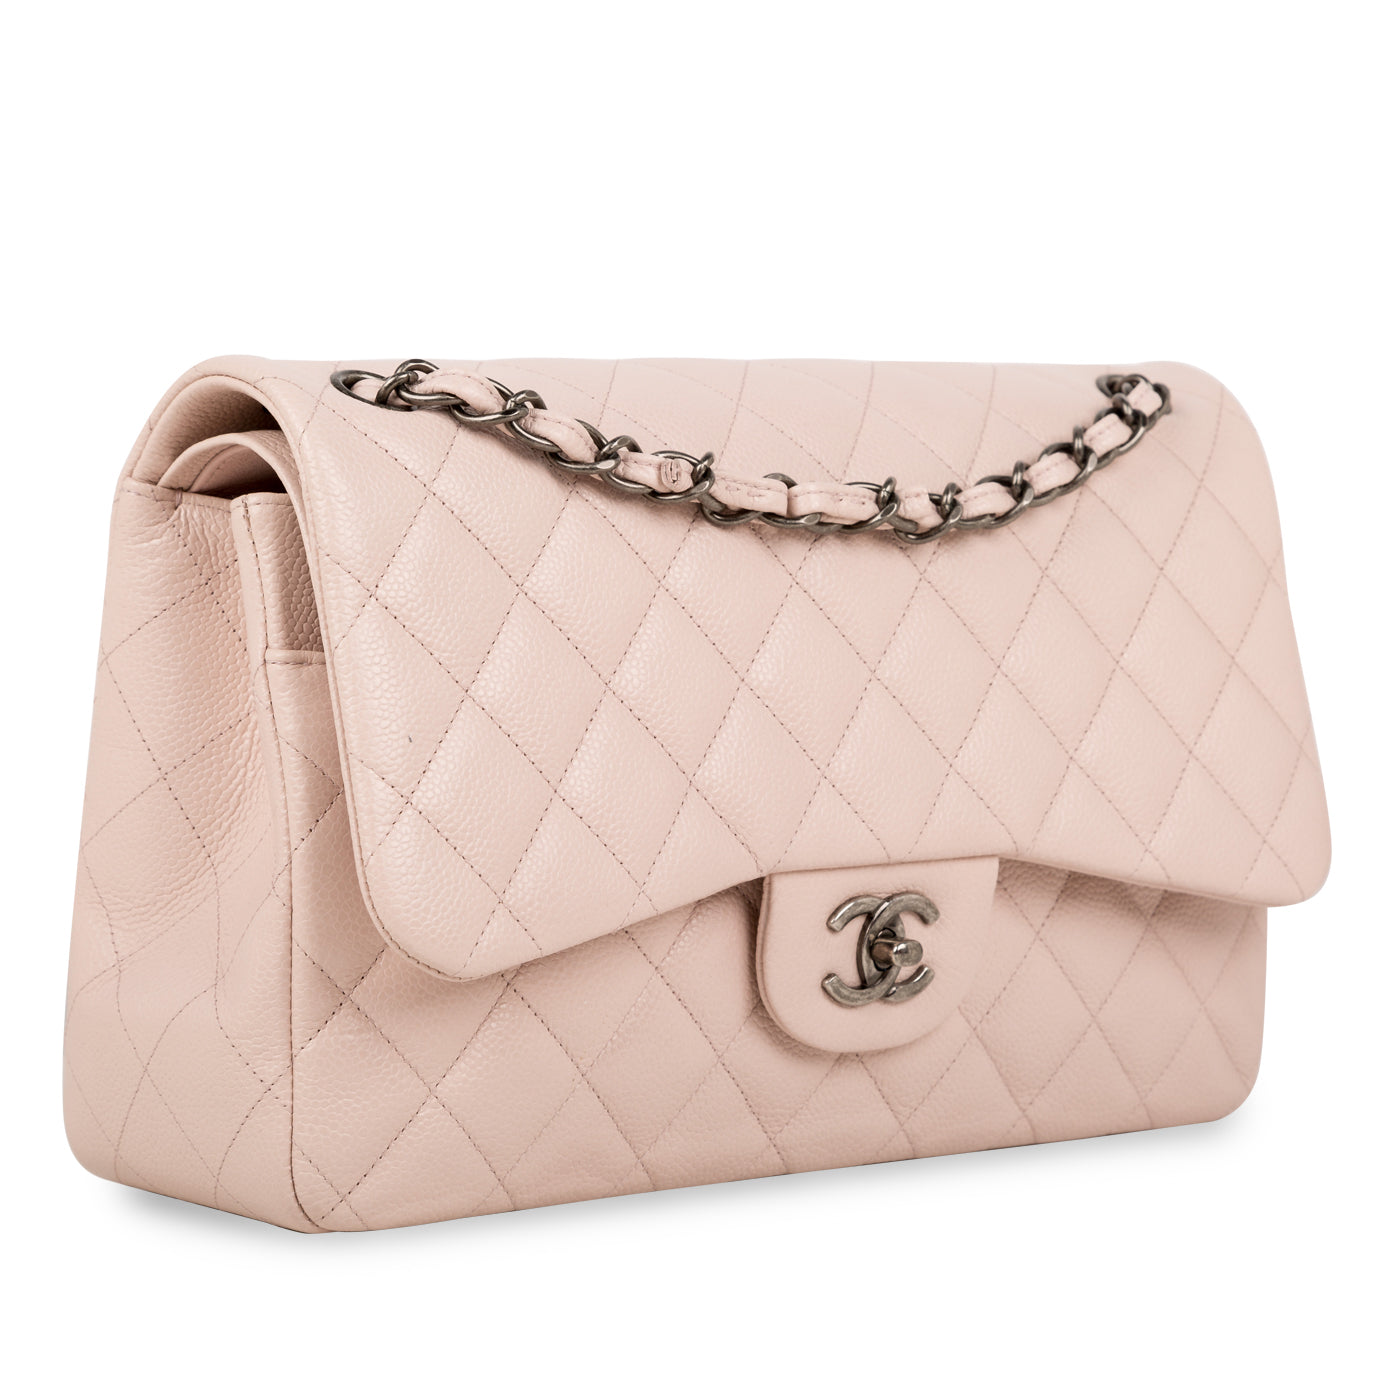 Chanel - Classic Flap Bag - Jumbo - Baby Pink Caviar - Ruthenium ...